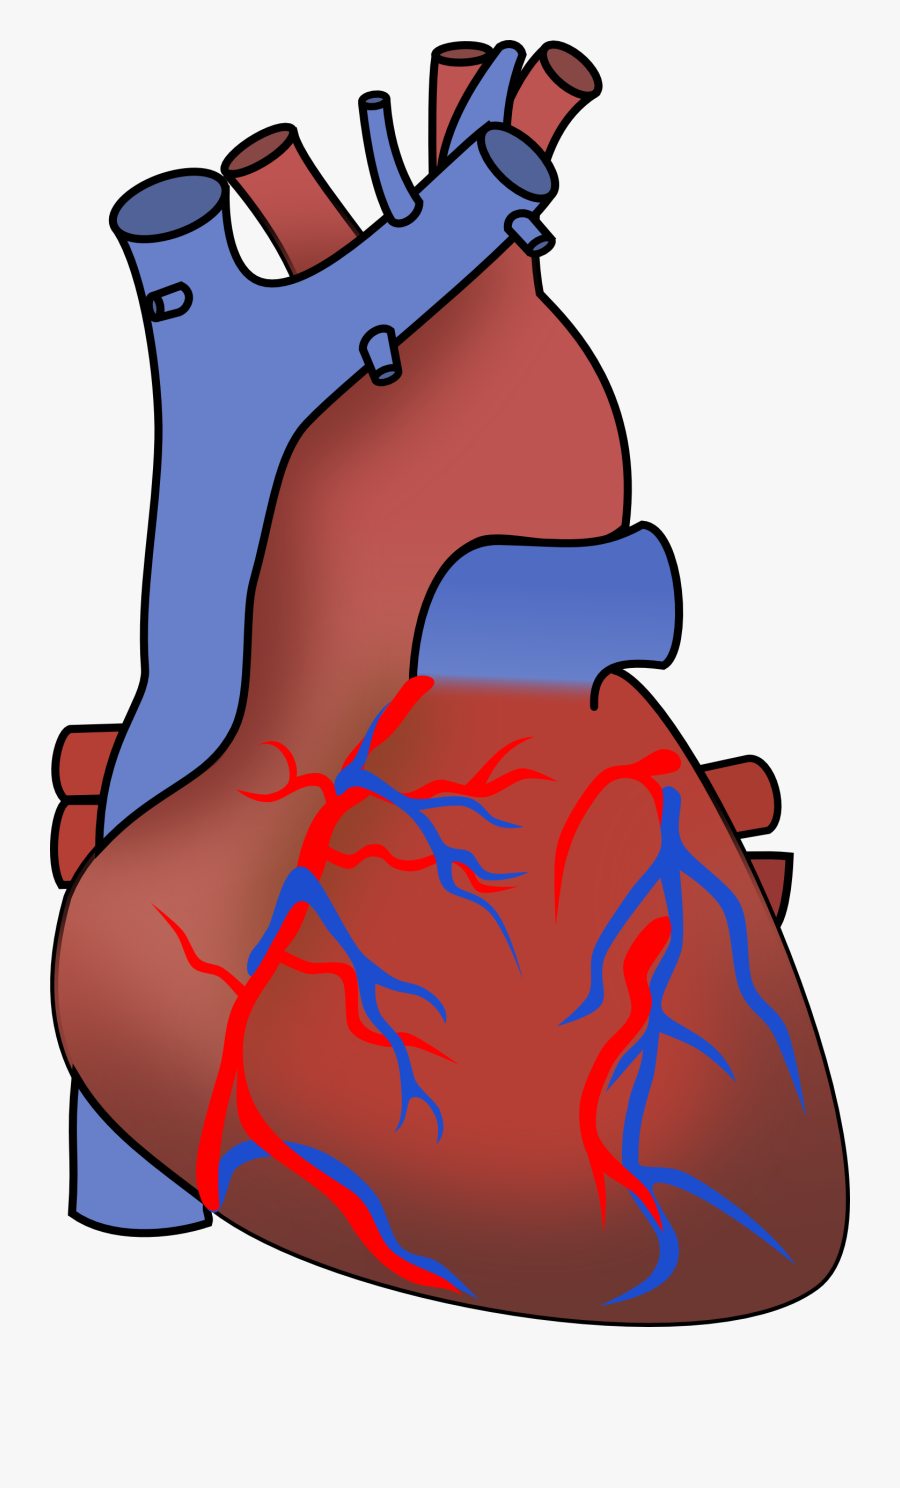 Human Heart - Human Heart Clipart Transparent Background, Transparent Clipart